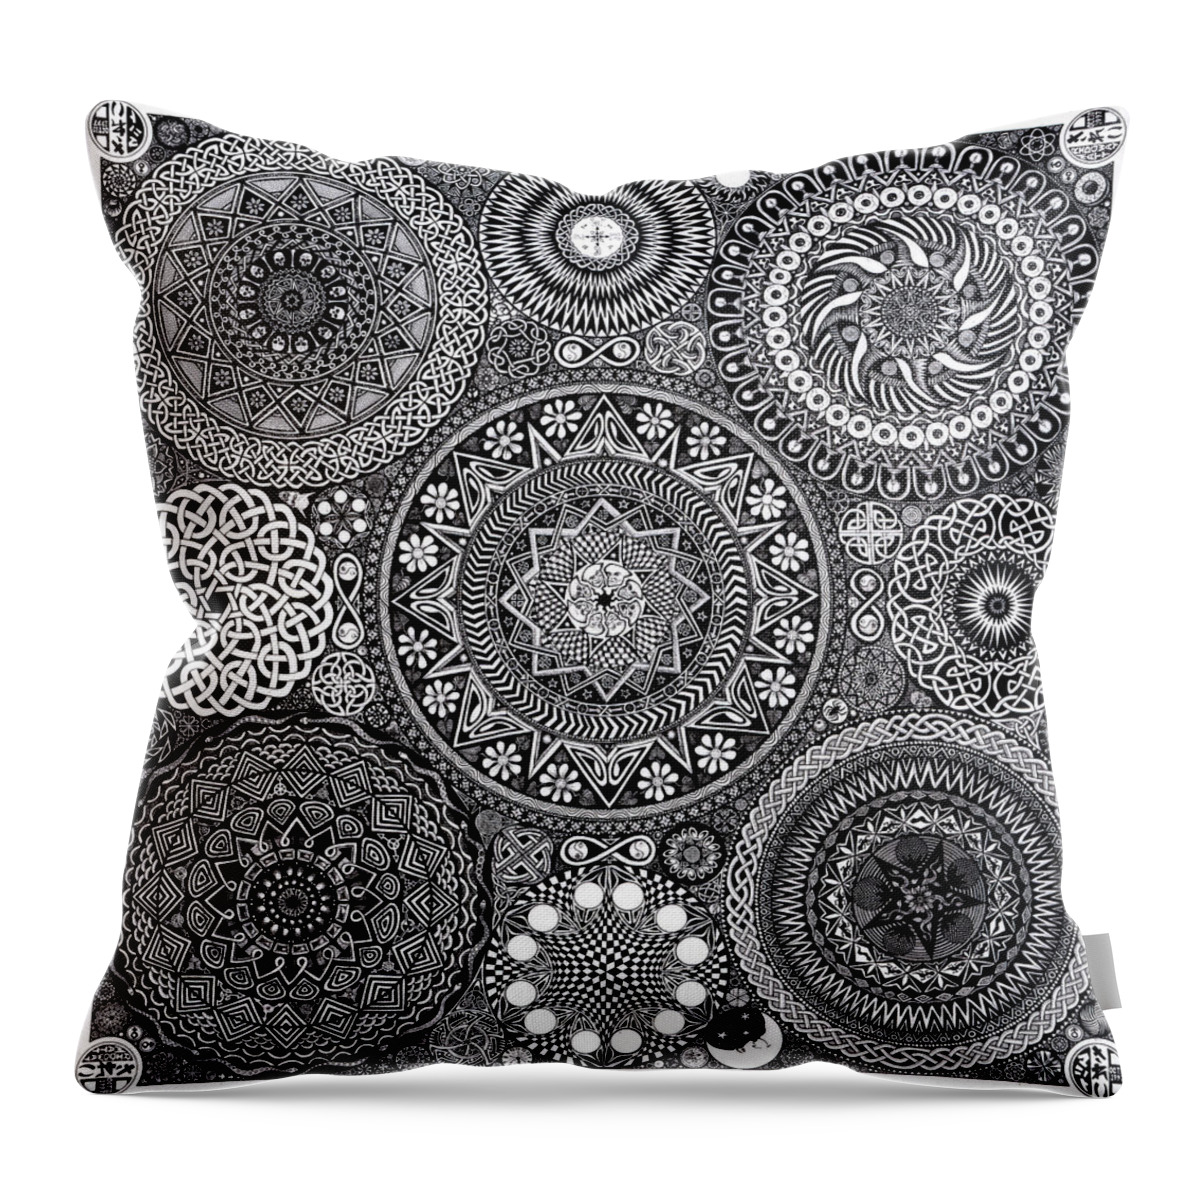 Mandala Throw Pillow featuring the drawing Mandala Bouquet by Matthew Ridgway